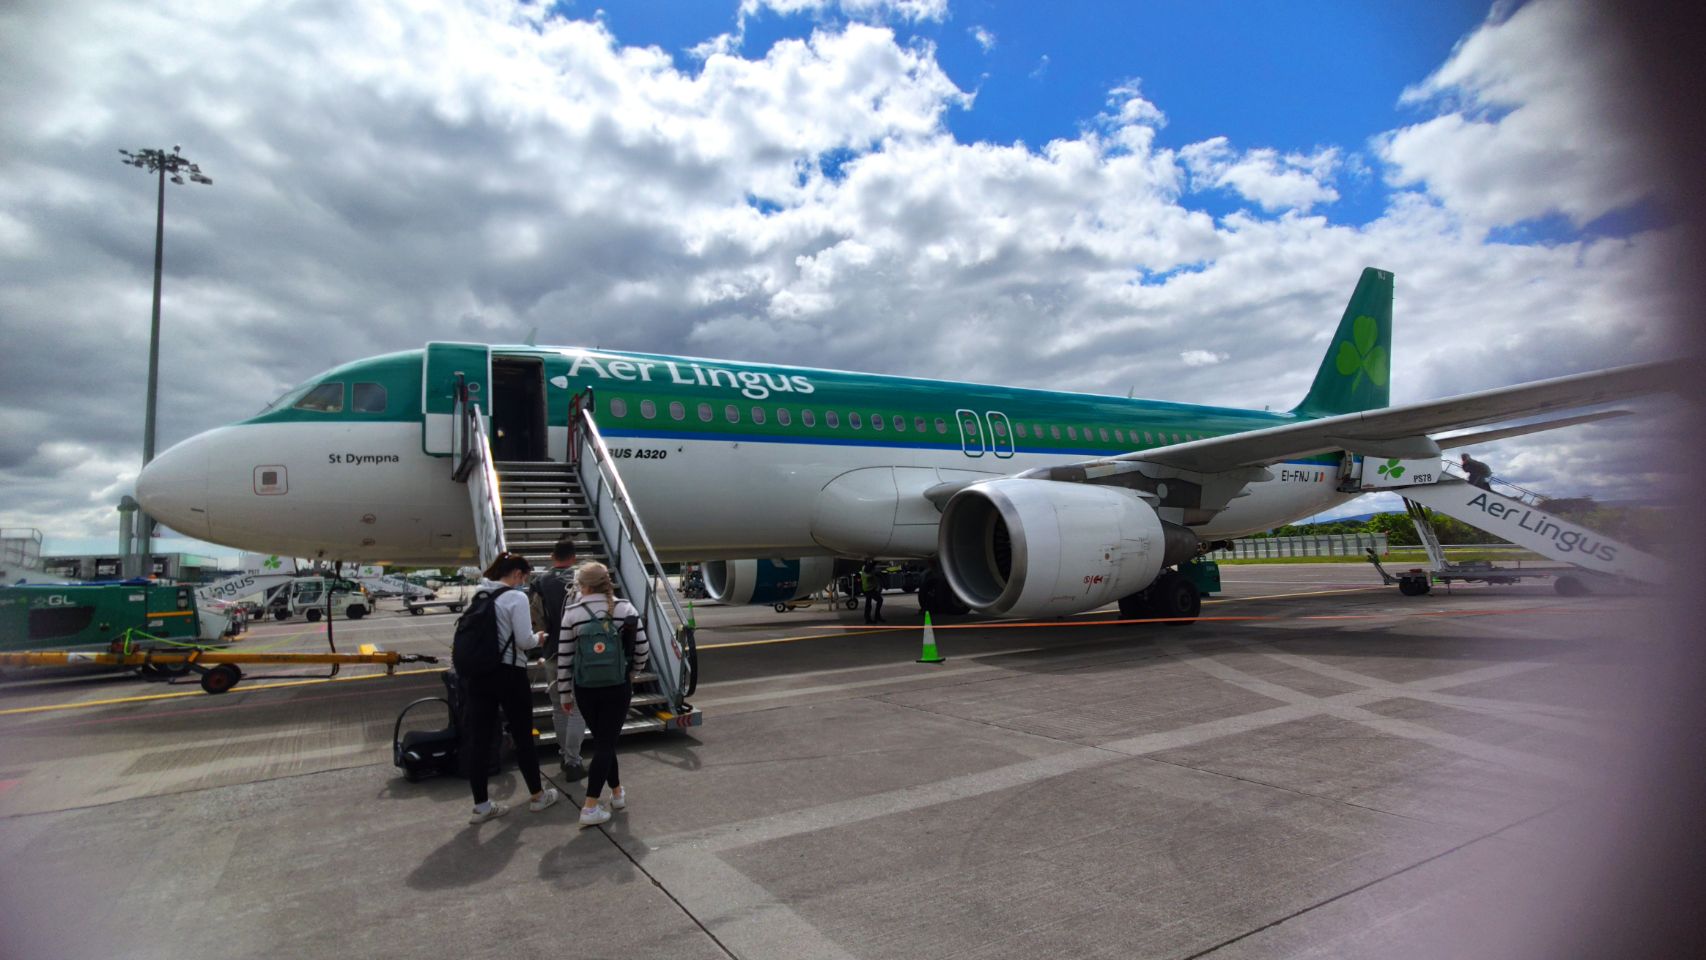 Aer Lingus avion - Derry - Irlande en camping-car